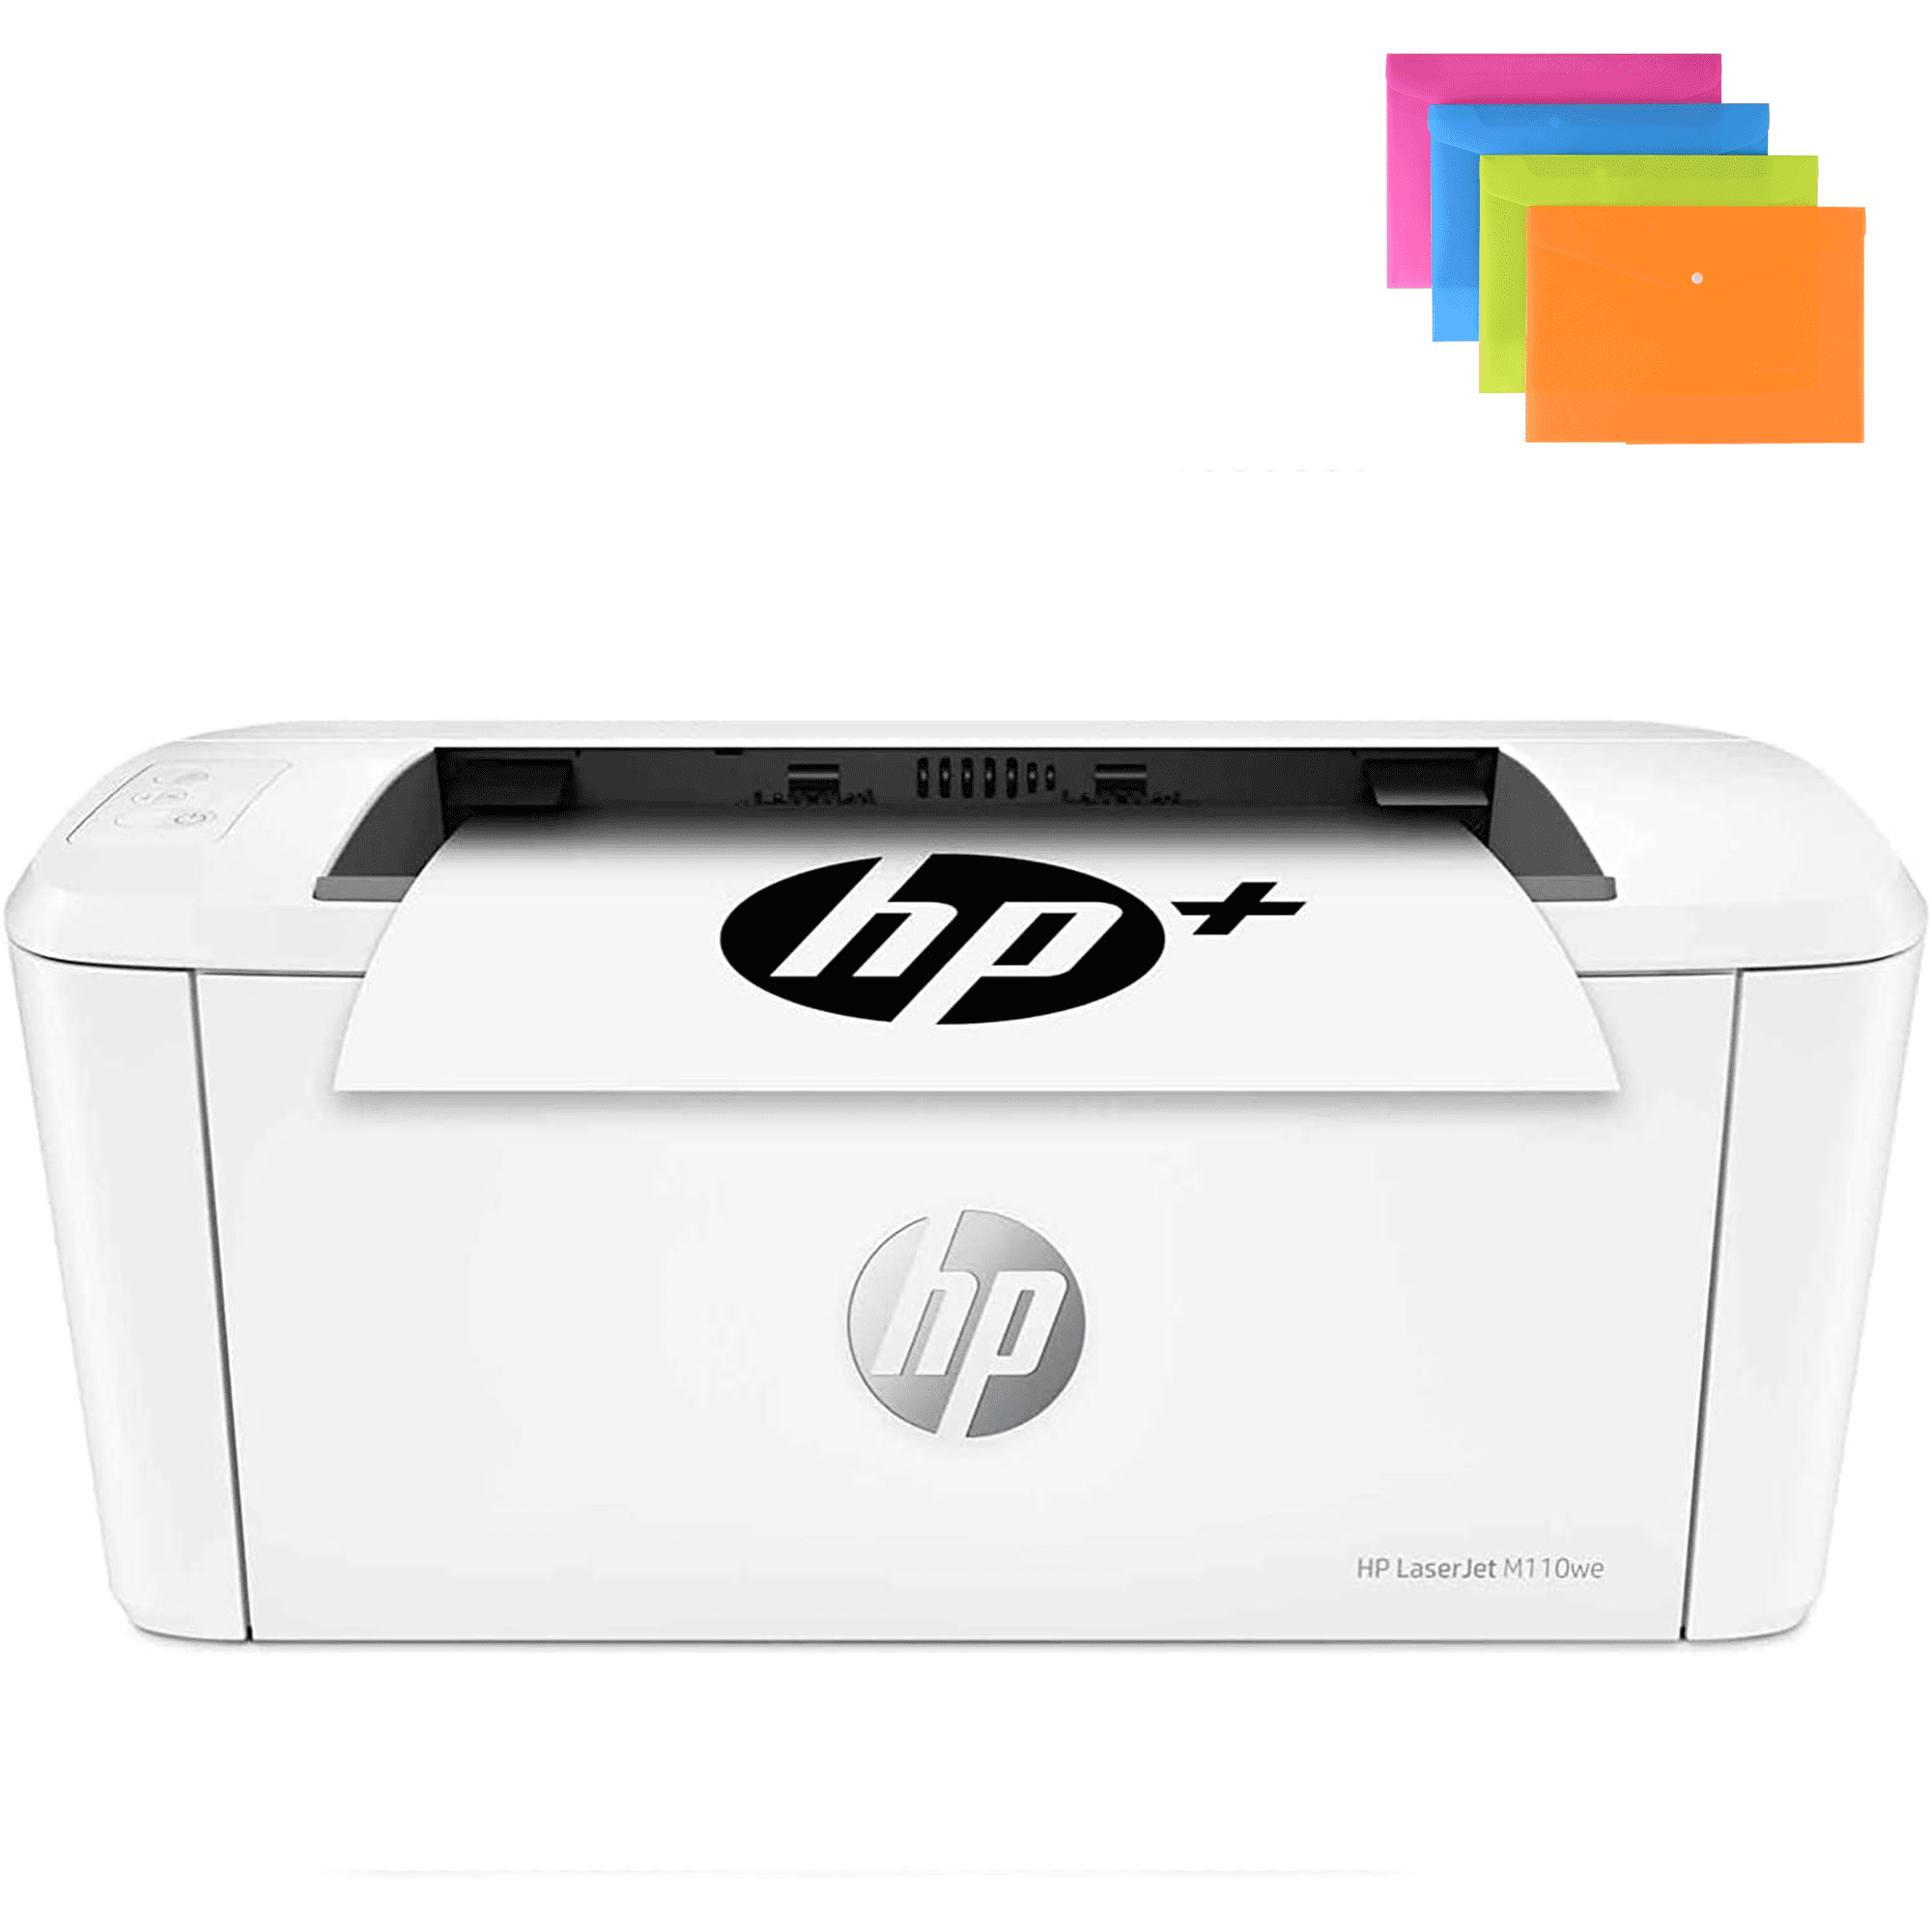 H-P Laserjet M110we Wireless Monochrome dpi, Laser Wi-Fi, USB, Auto-On/Auto-Off Print, x Folders 21 HP+, ppm, with 600 14, 600 Printer File x 8.5 Technology